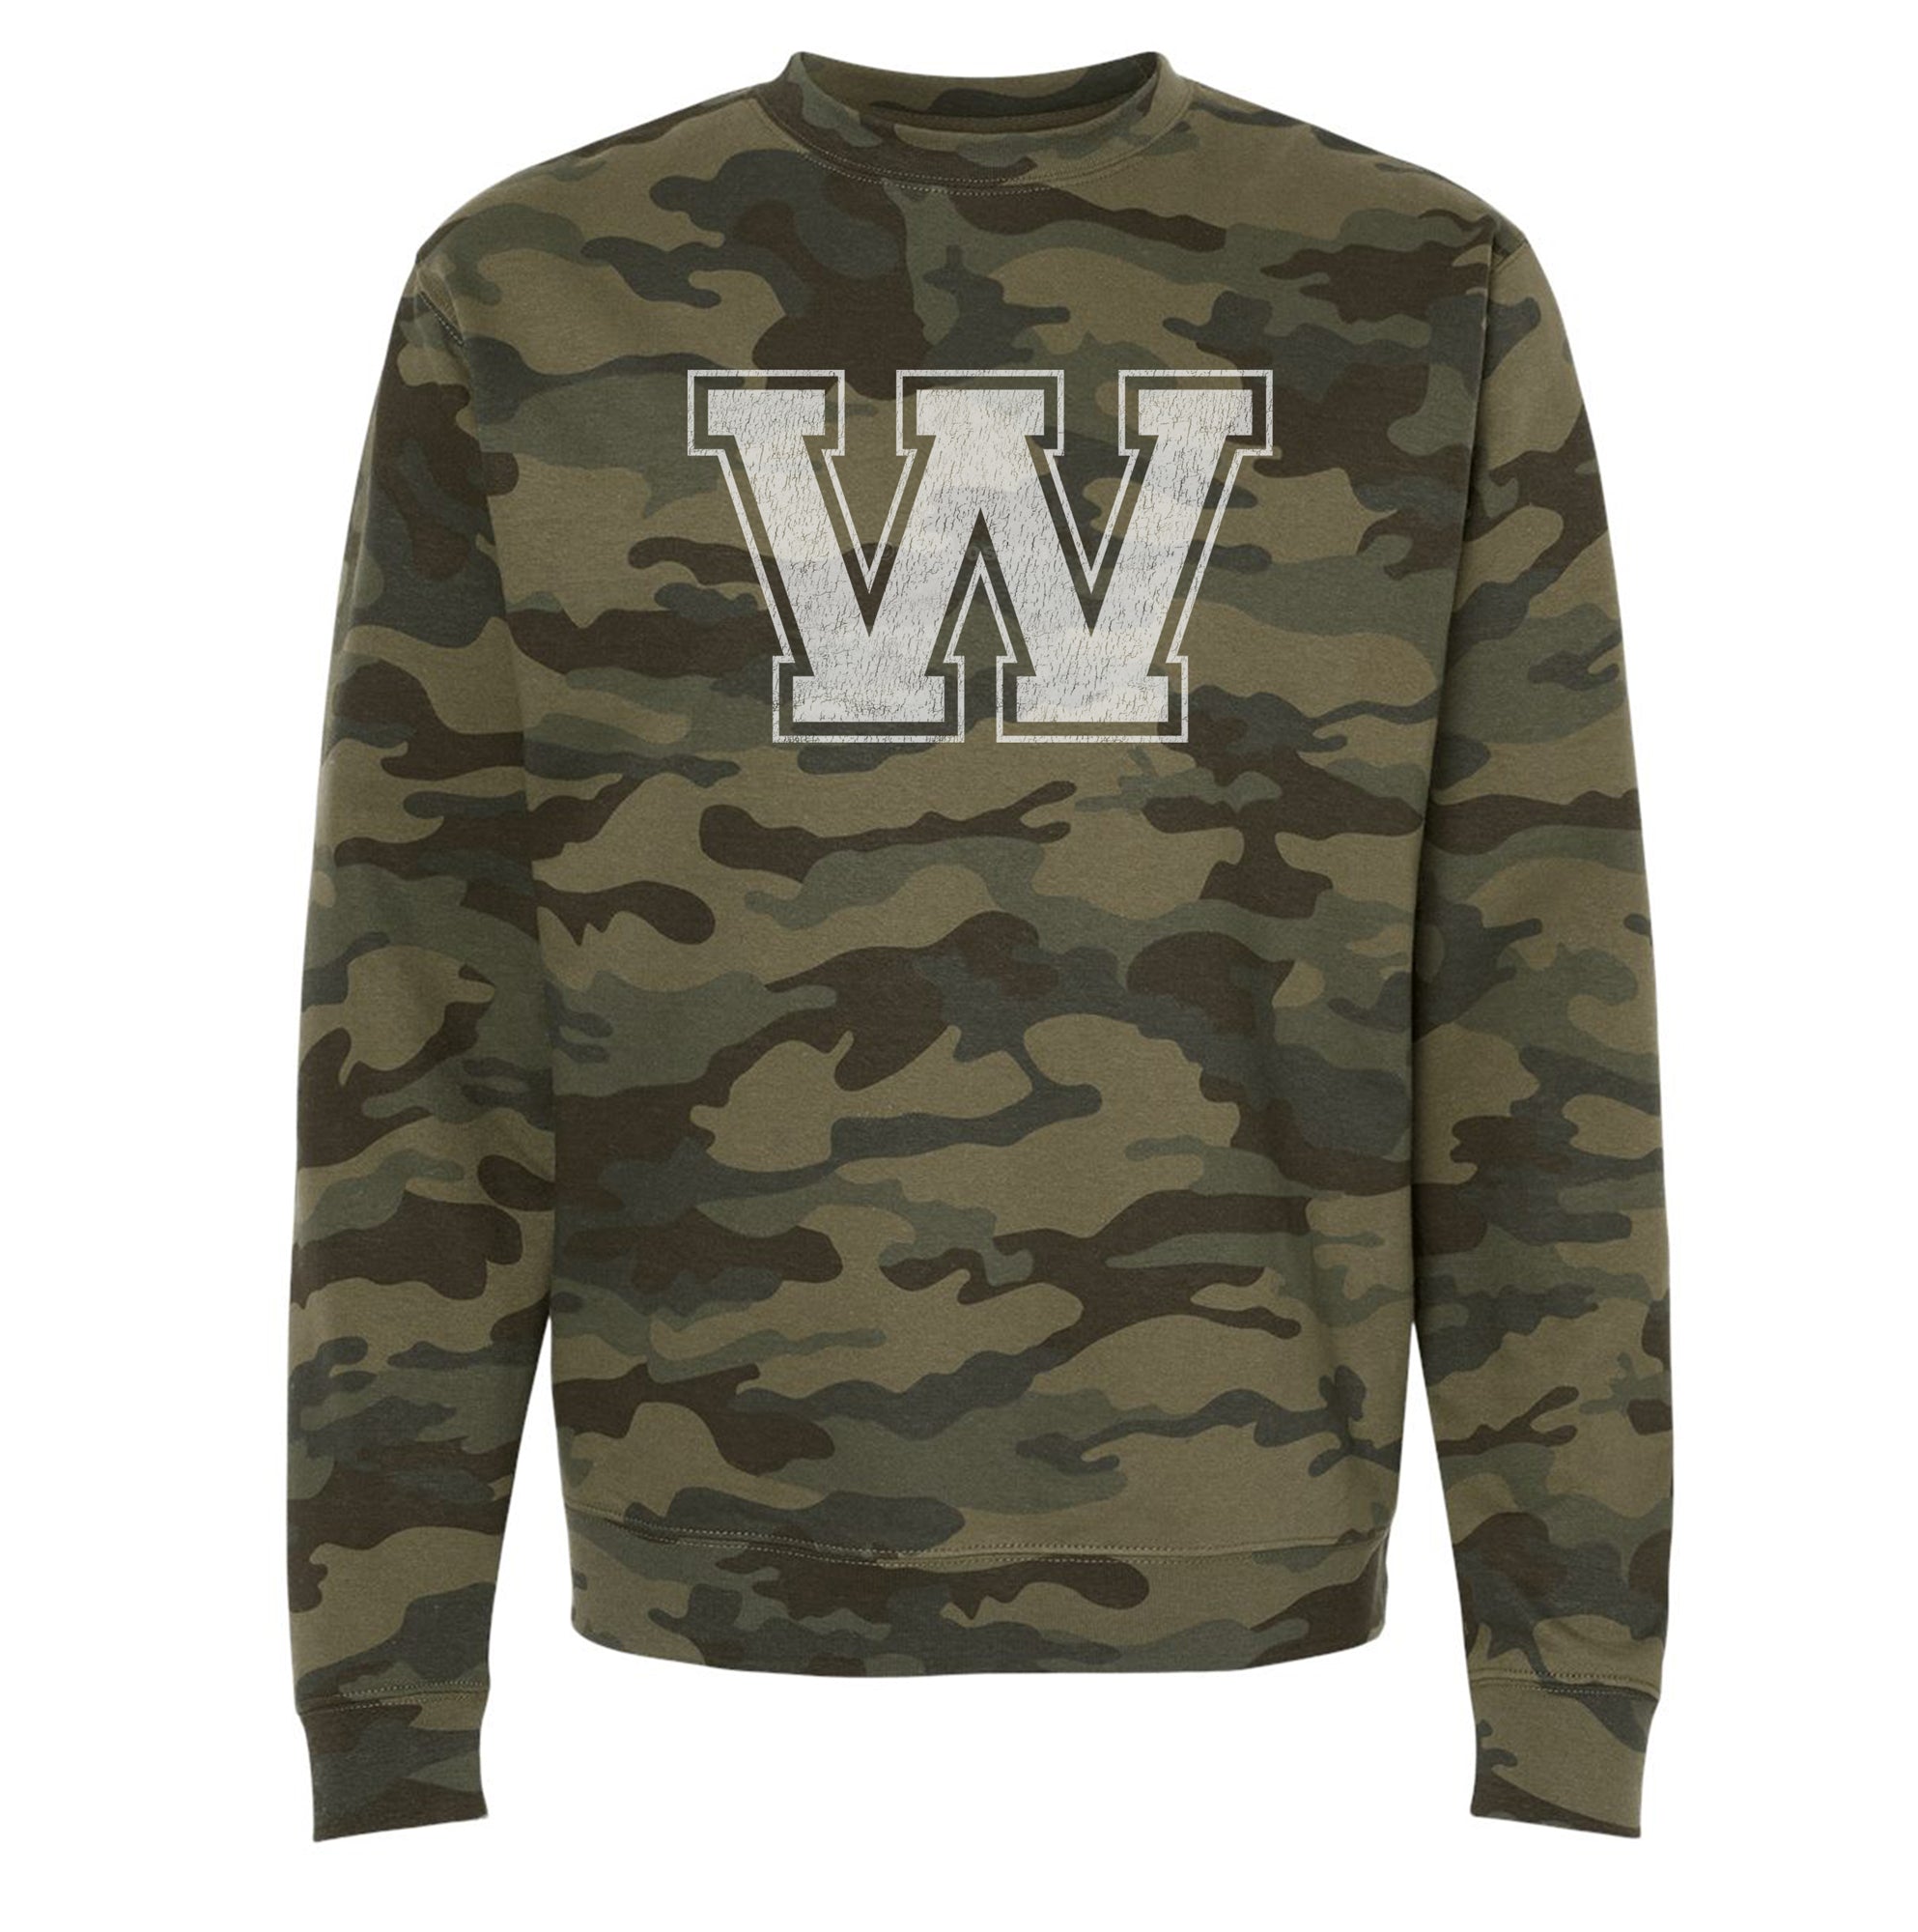 "W" - Vintage - Adult Comfy Sweatshirt